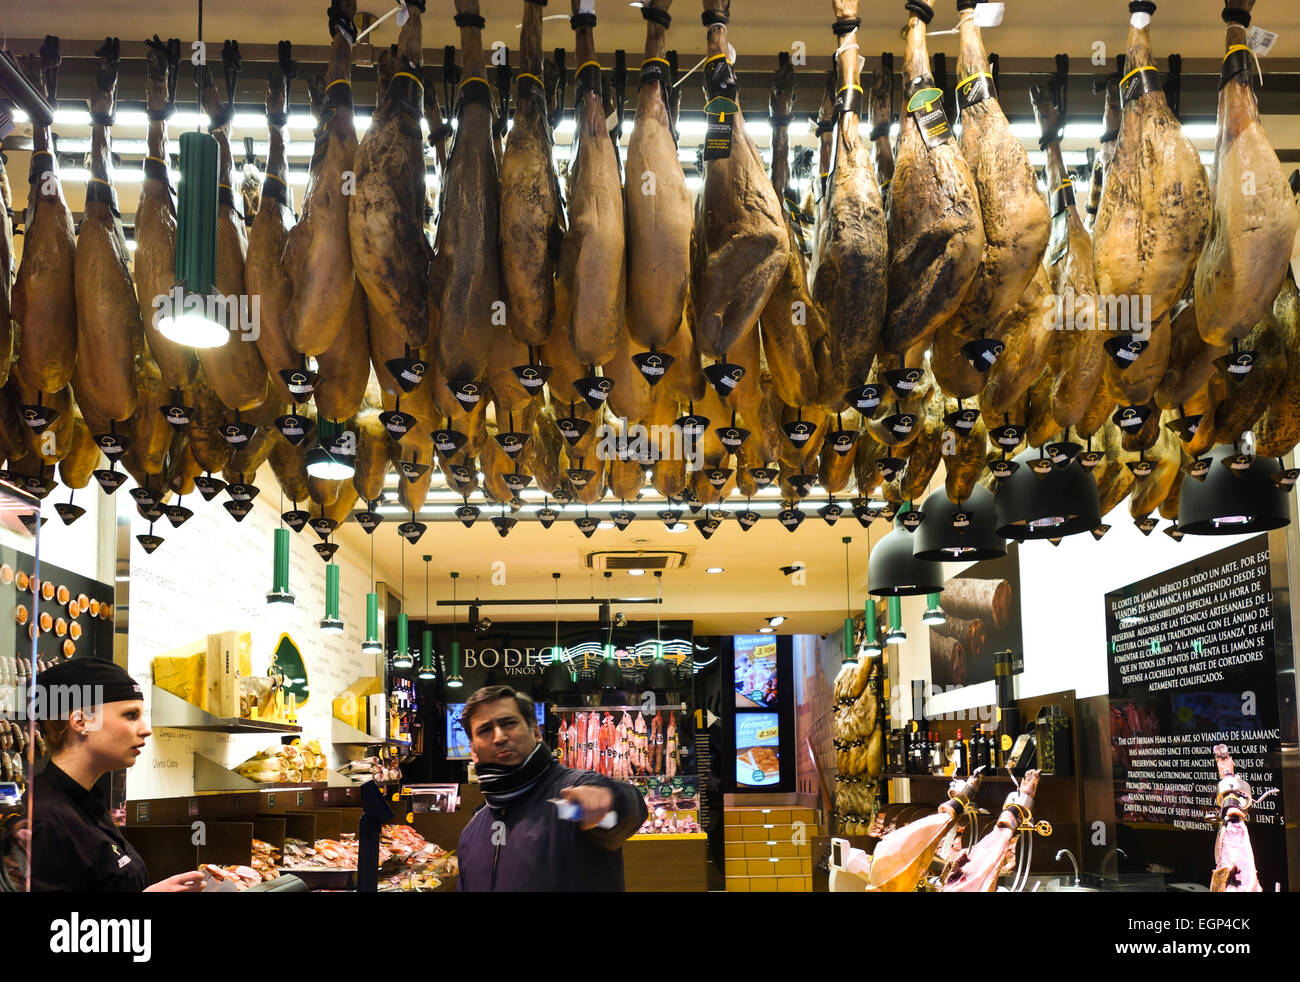 Serrano Iberian Ham legs, Jamon iberico, hanging from cealing,  Viandas de Salamanca, Madrid, Spain. Stock Photo